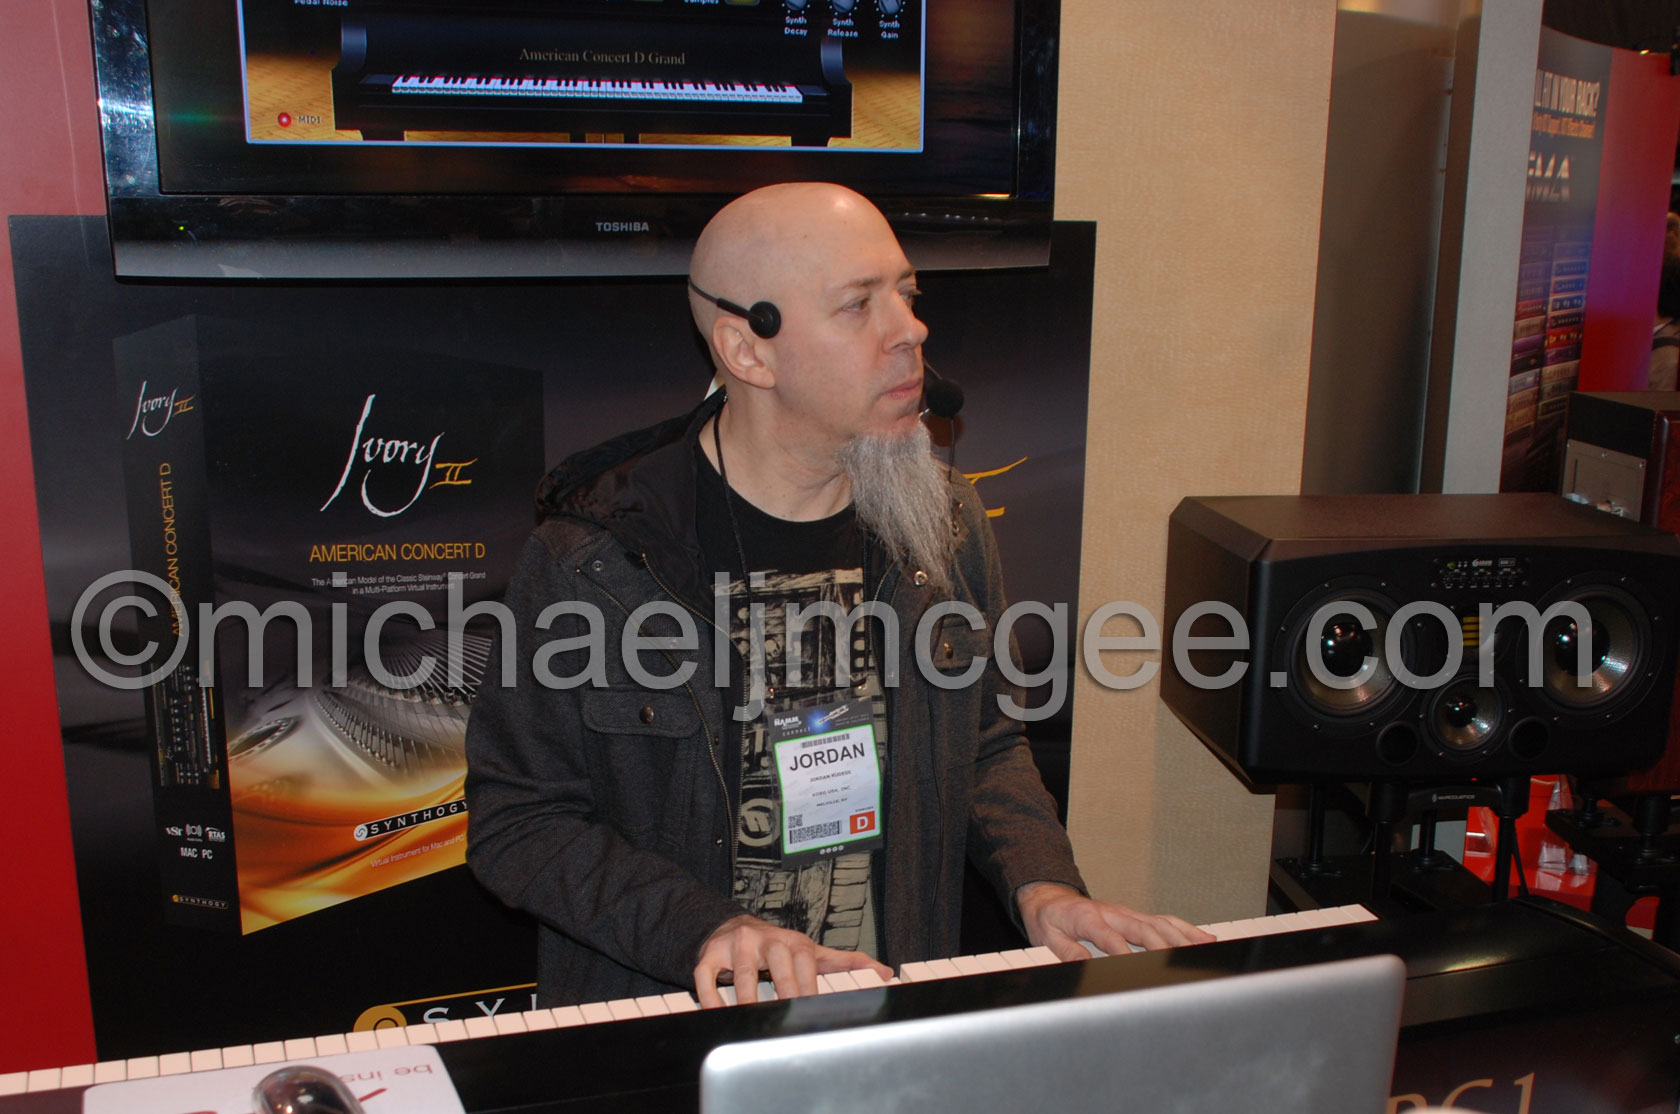 Jordan Rudess / michaeljmcgee.com